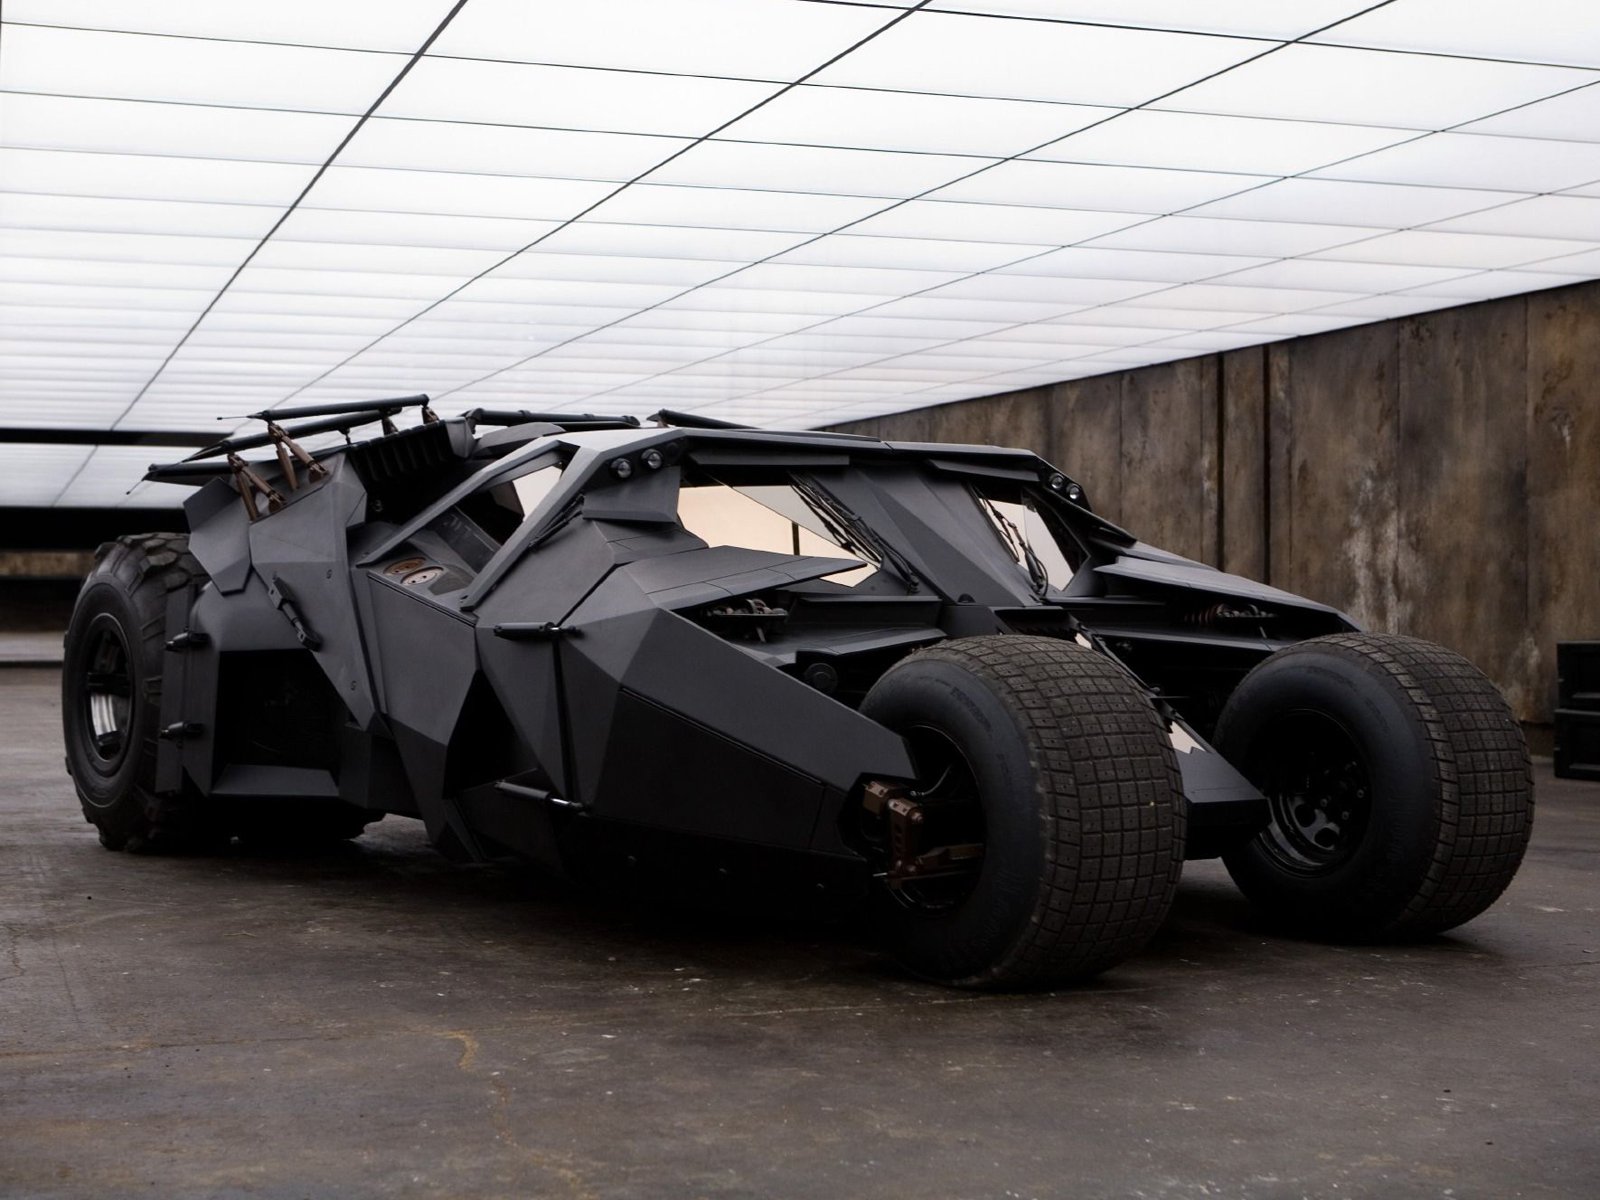 UAE: Batman’s Tumbler Batmobile replica for sale in Dubai for $1M!